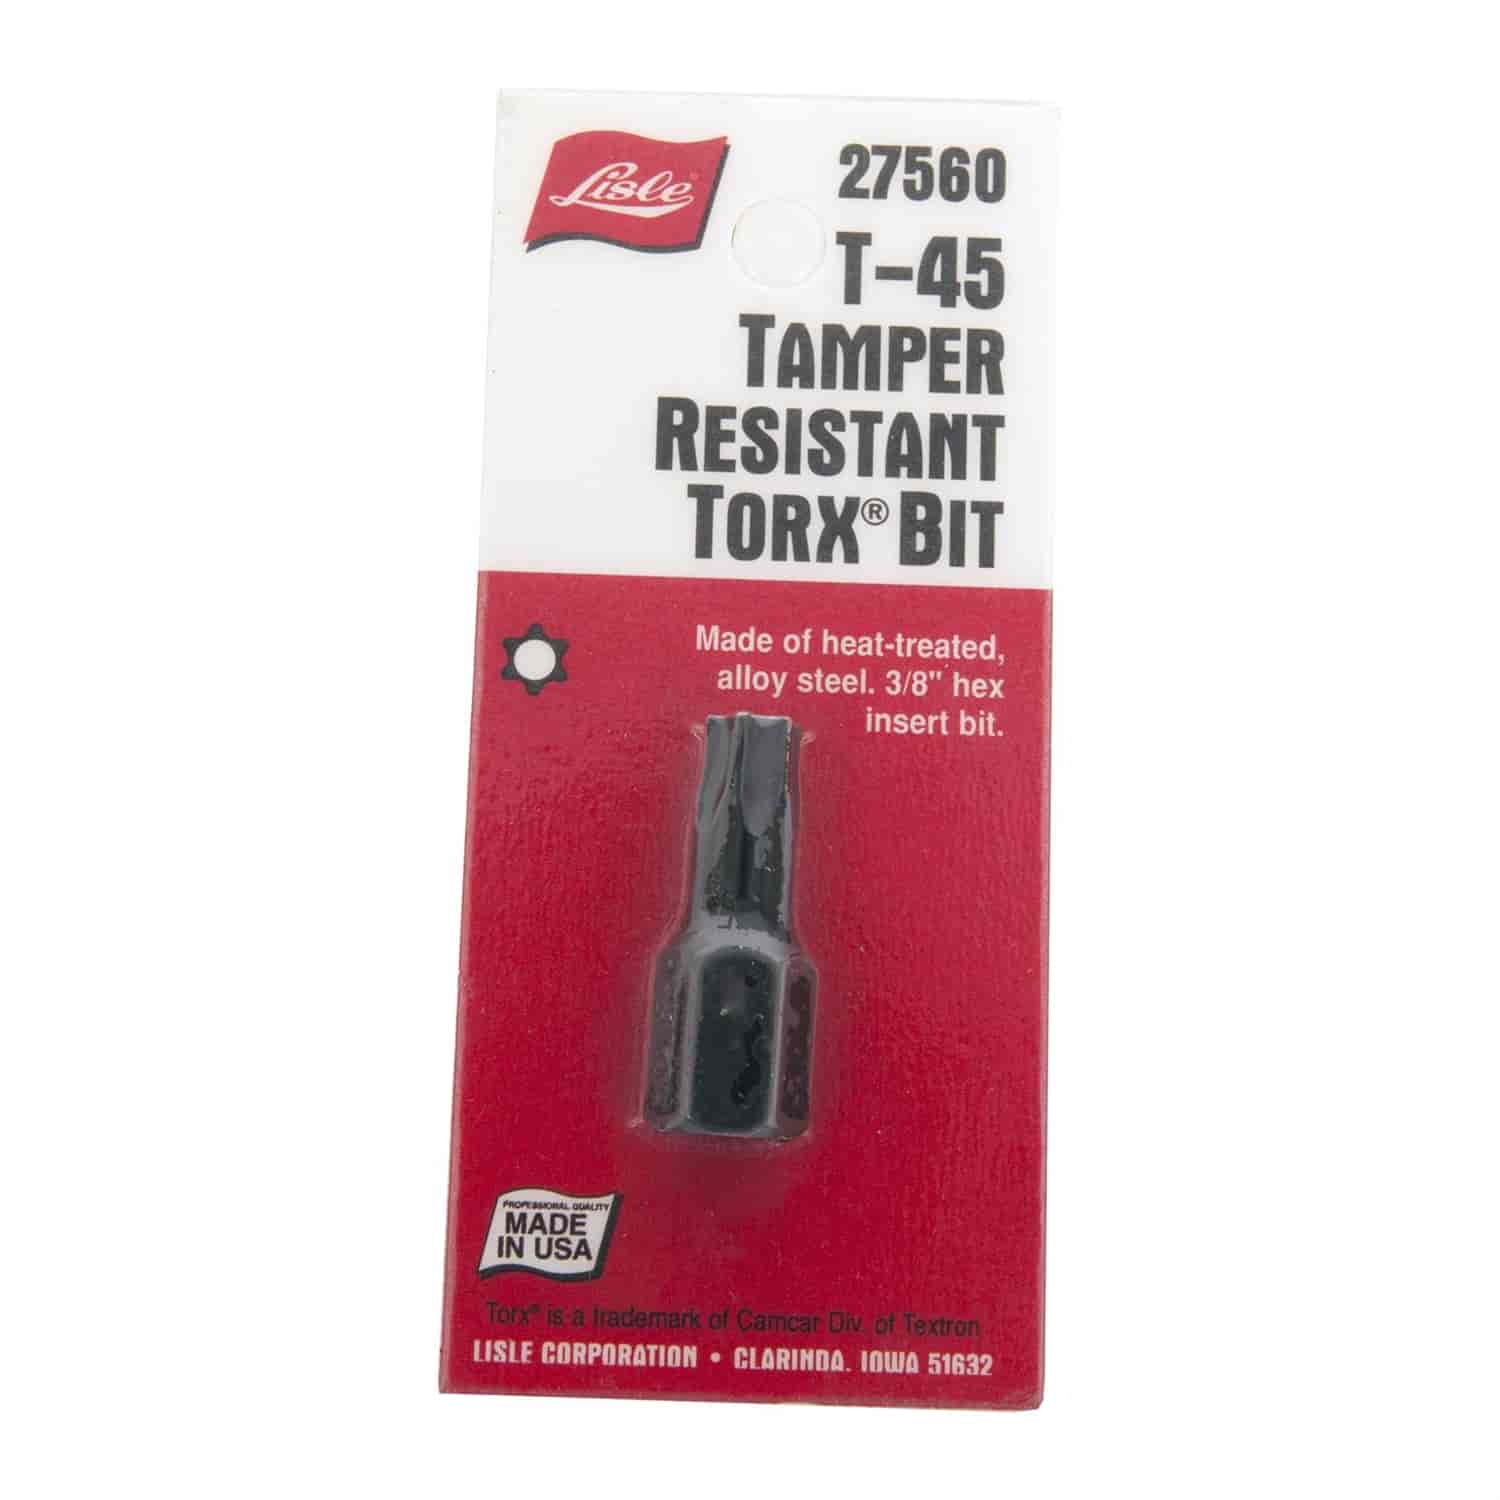 T45 Tamper Resistant Torx Bit